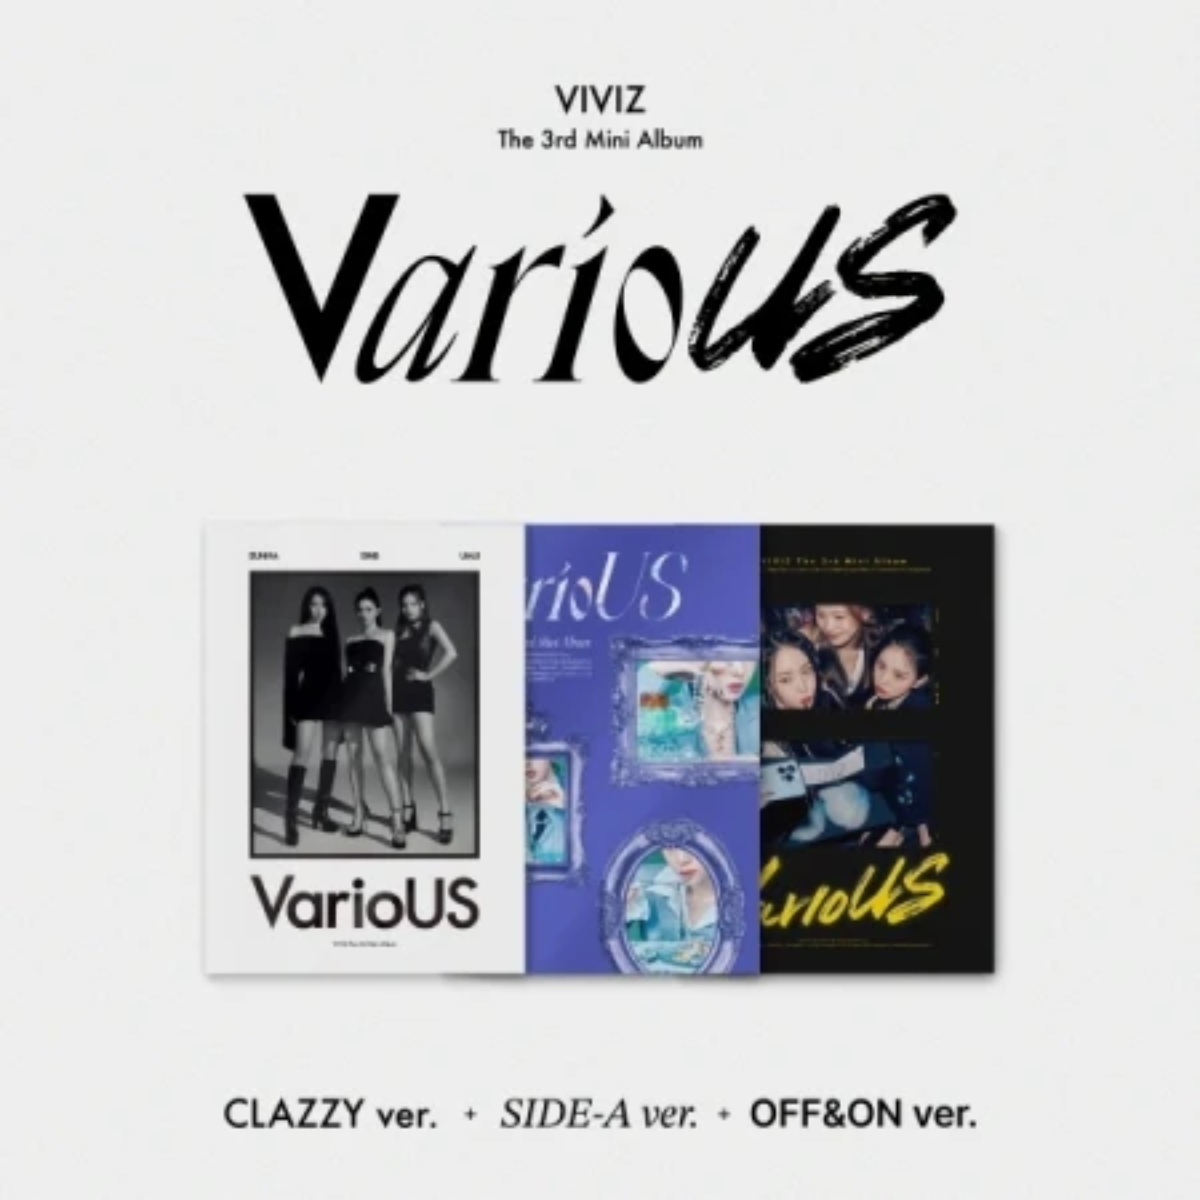 VIVIZ Mini Album Vol. 3 - VarioUS